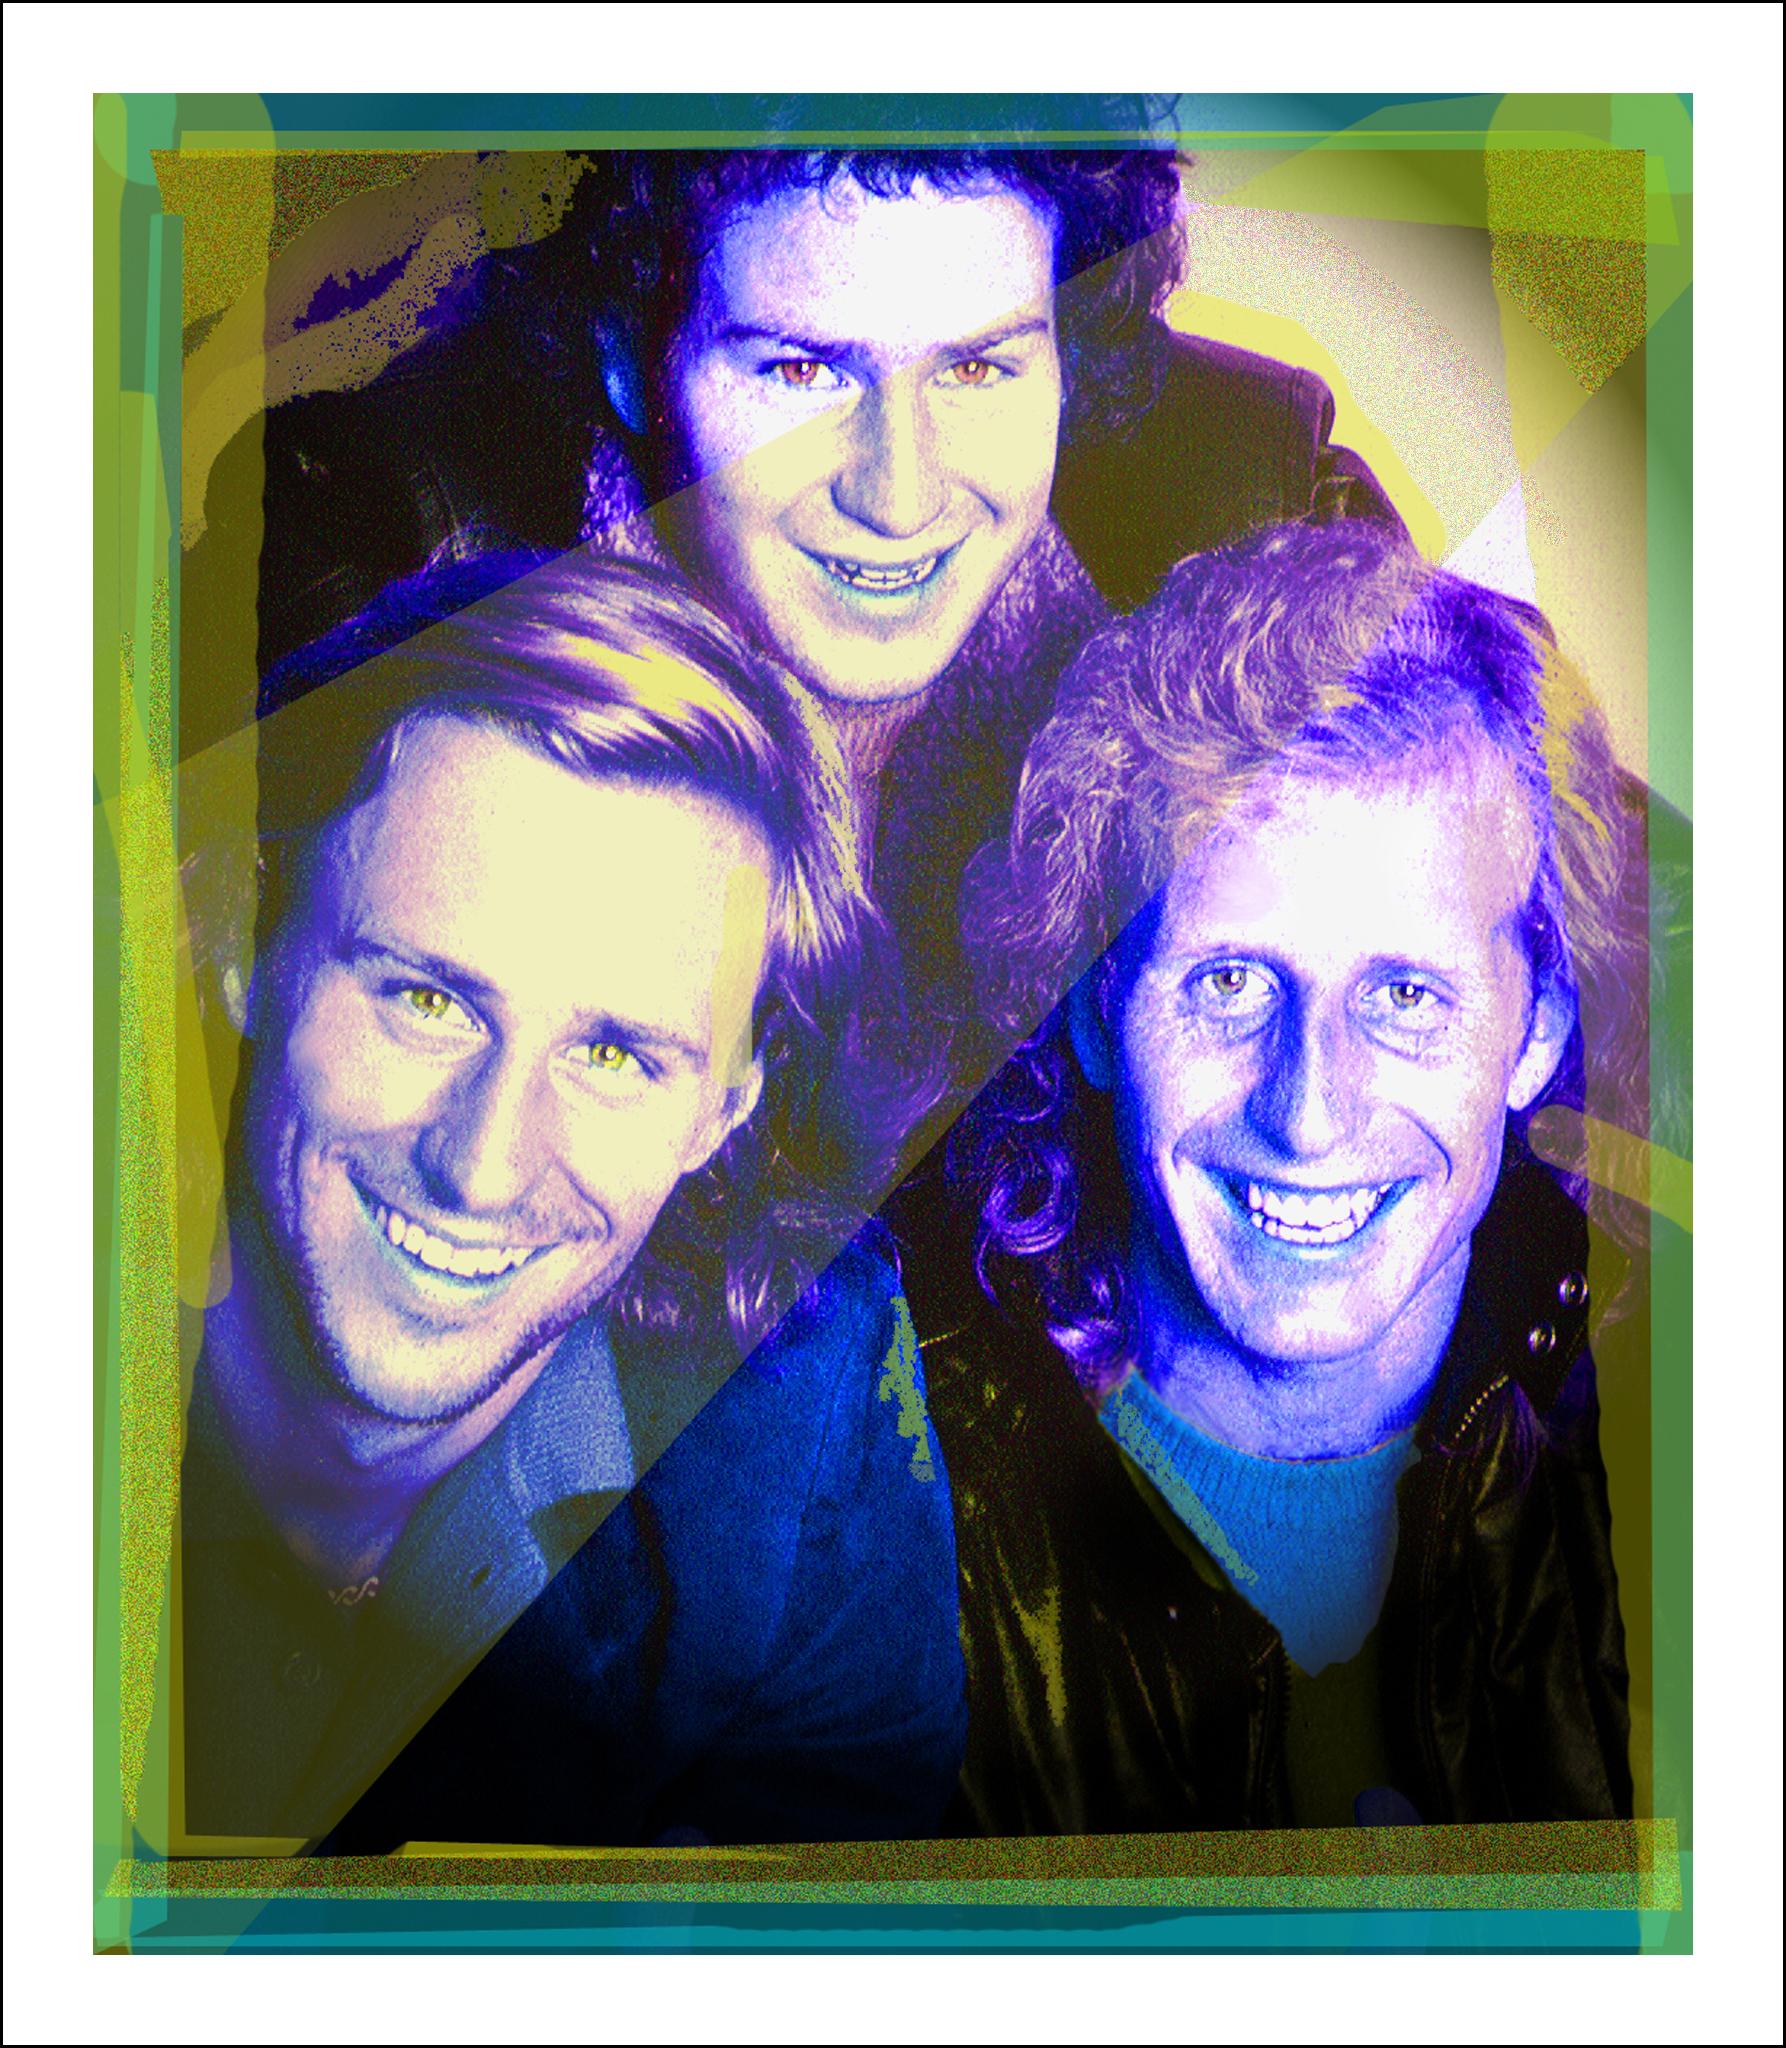 Gary Bernstein Portrait Photograph - John McEnroe, Bjorn Borg, Vitas Gerulaitis at Studio 54 v1 (see details below)